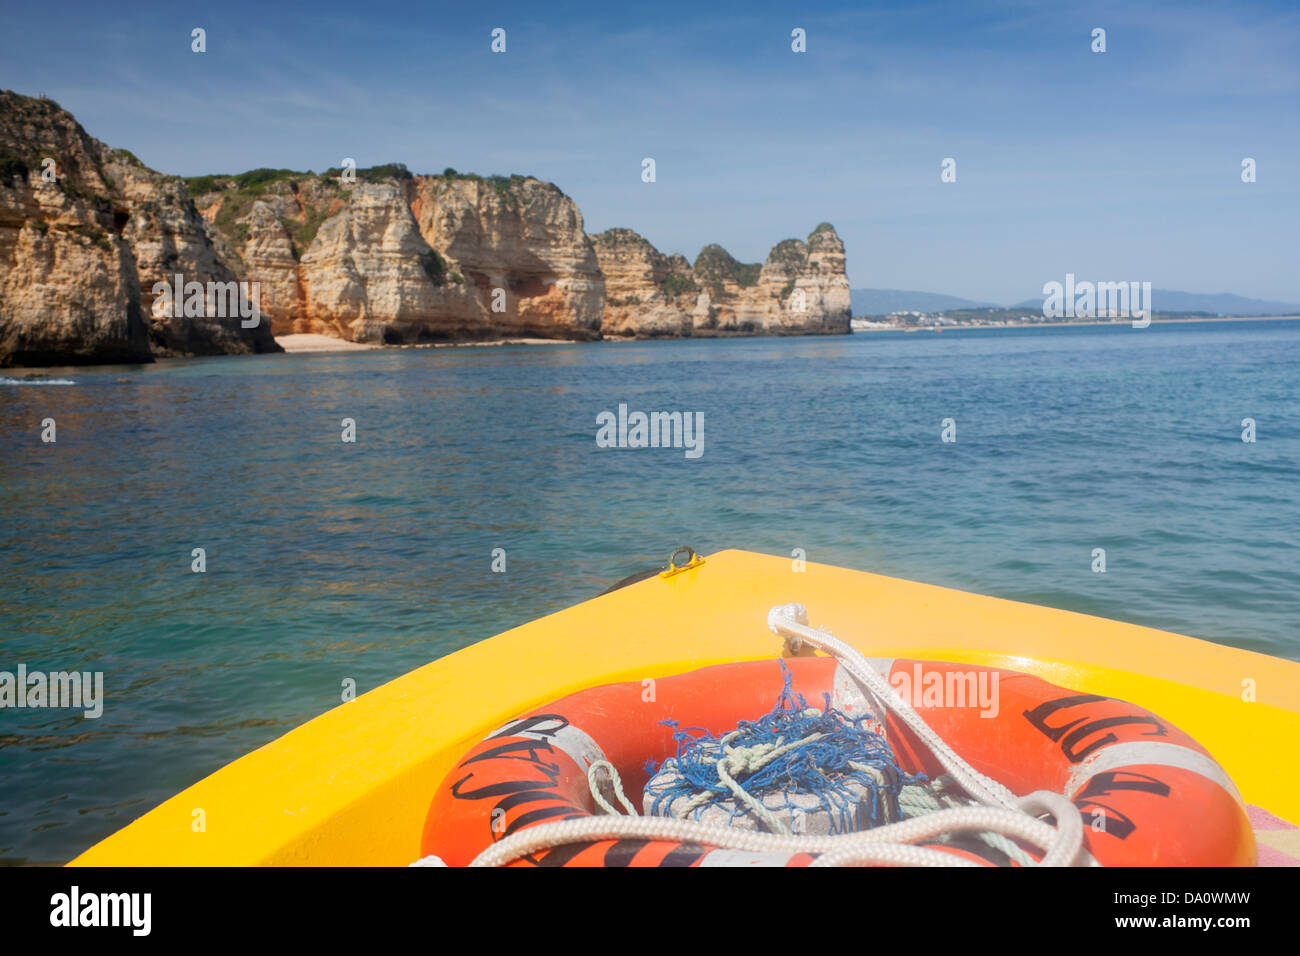 View from on board boat during trip around coastline at Ponta da Piedade Lagos Algarve Portugal Stock Photo